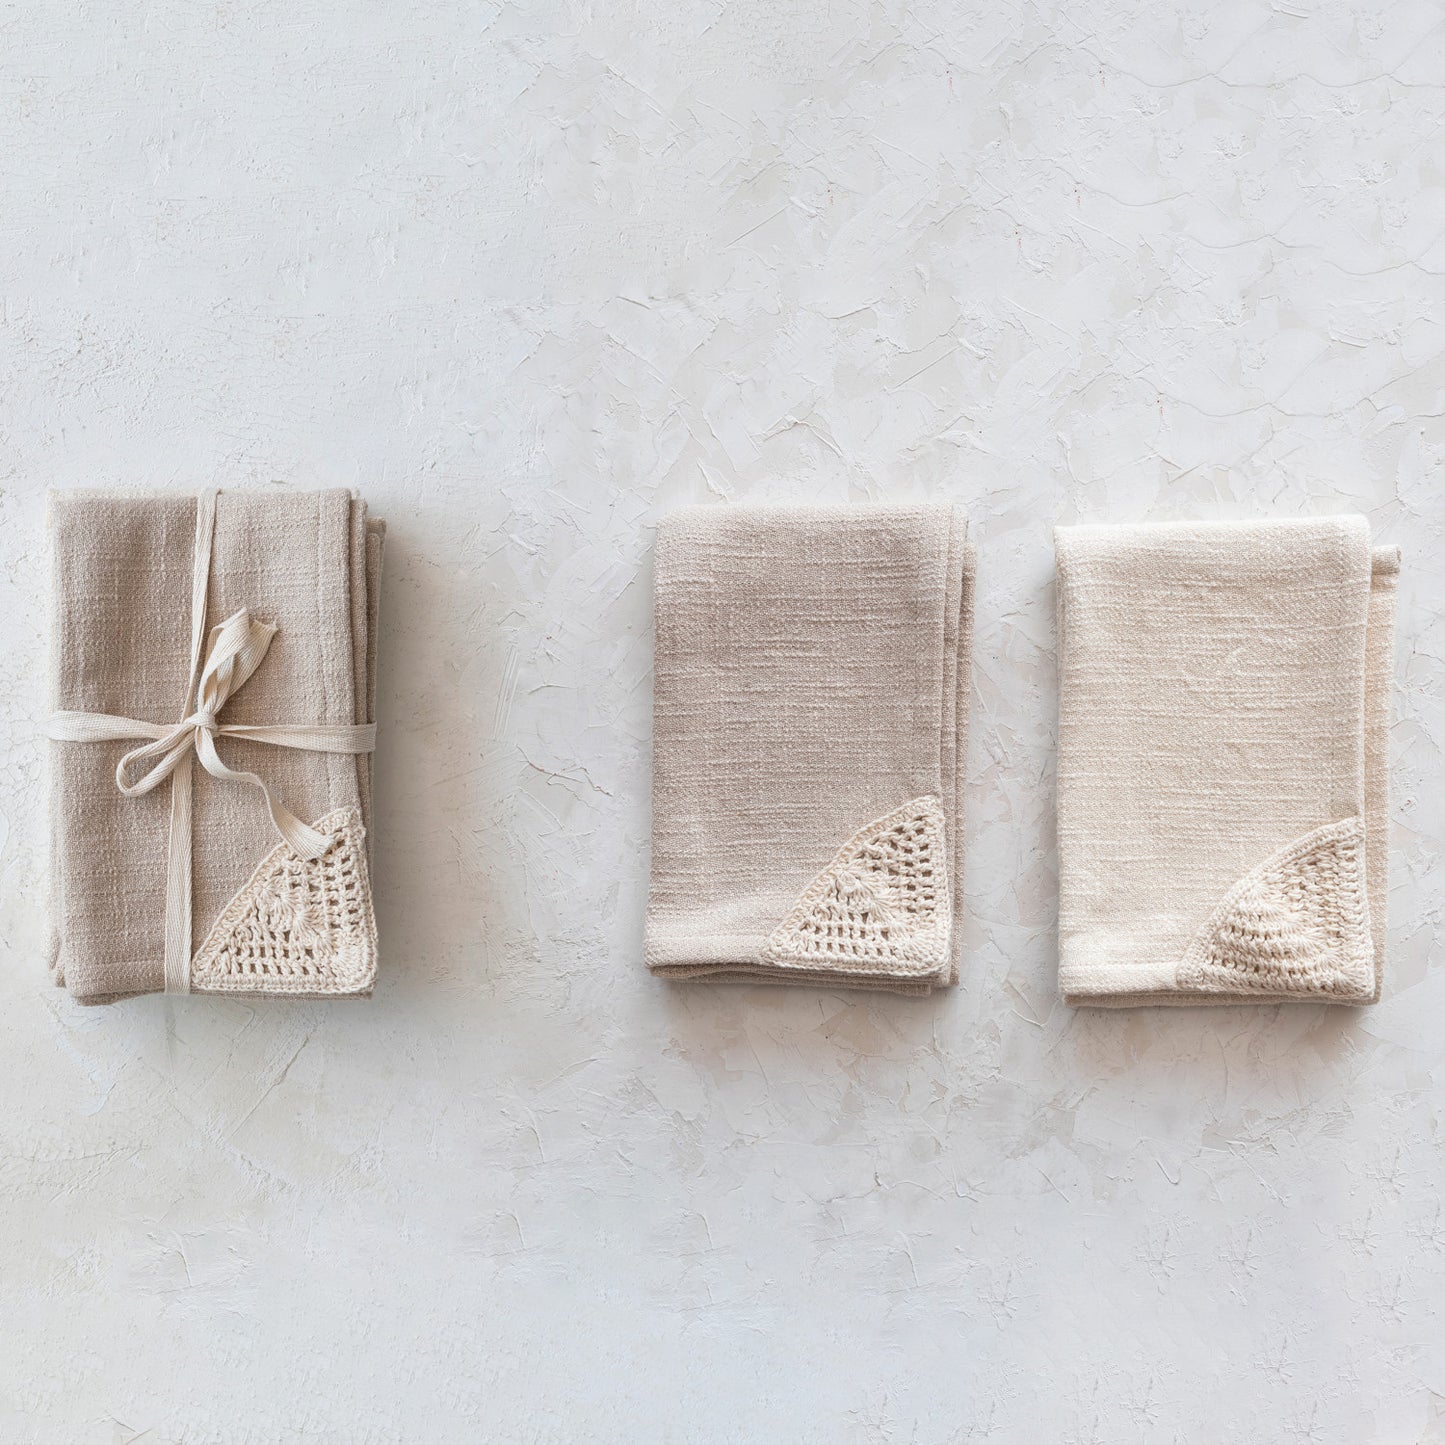 Woven Cotton Tea Towels w/ Crochet Corner, Natural & Beige, Set of 2